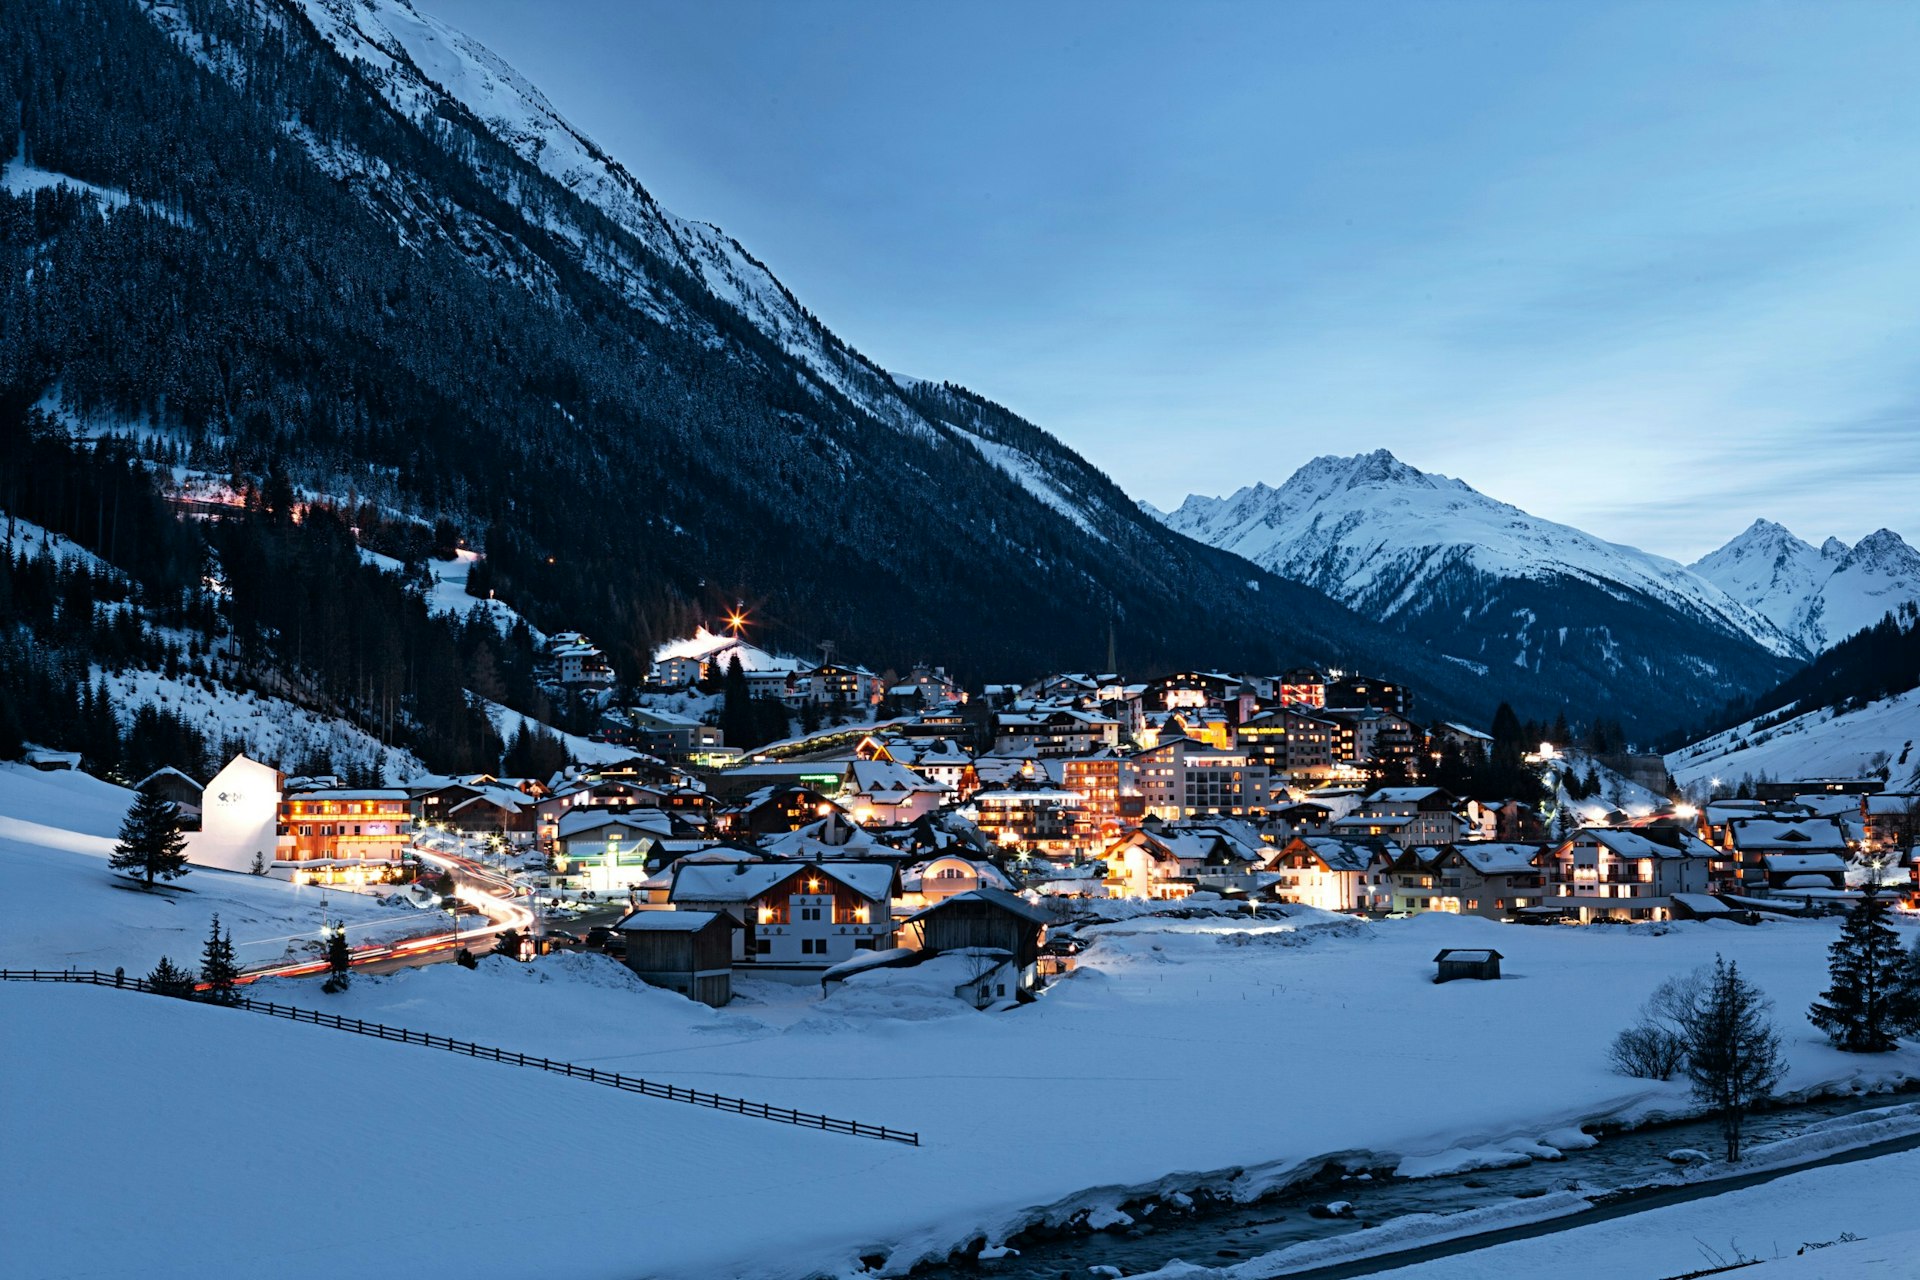 A resort view of the ski resort of Ischgl in Austria